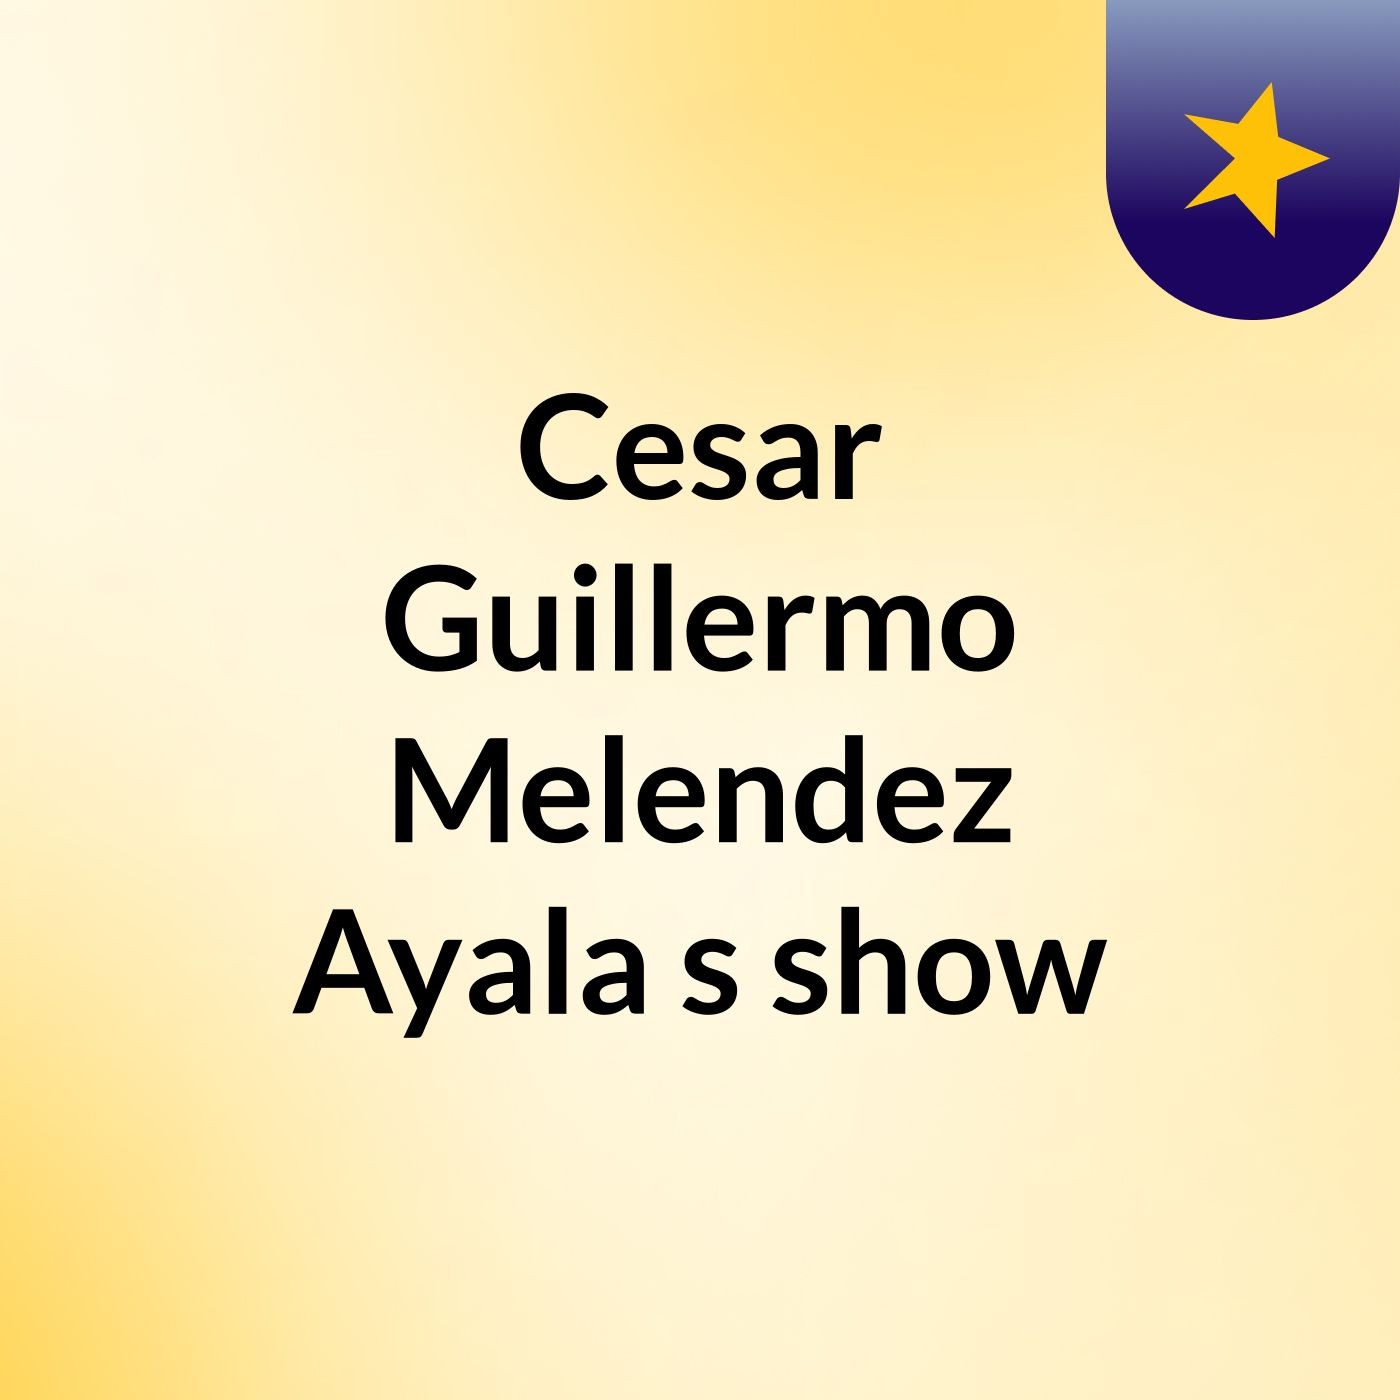 Cesar Guillermo Melendez Ayala's show